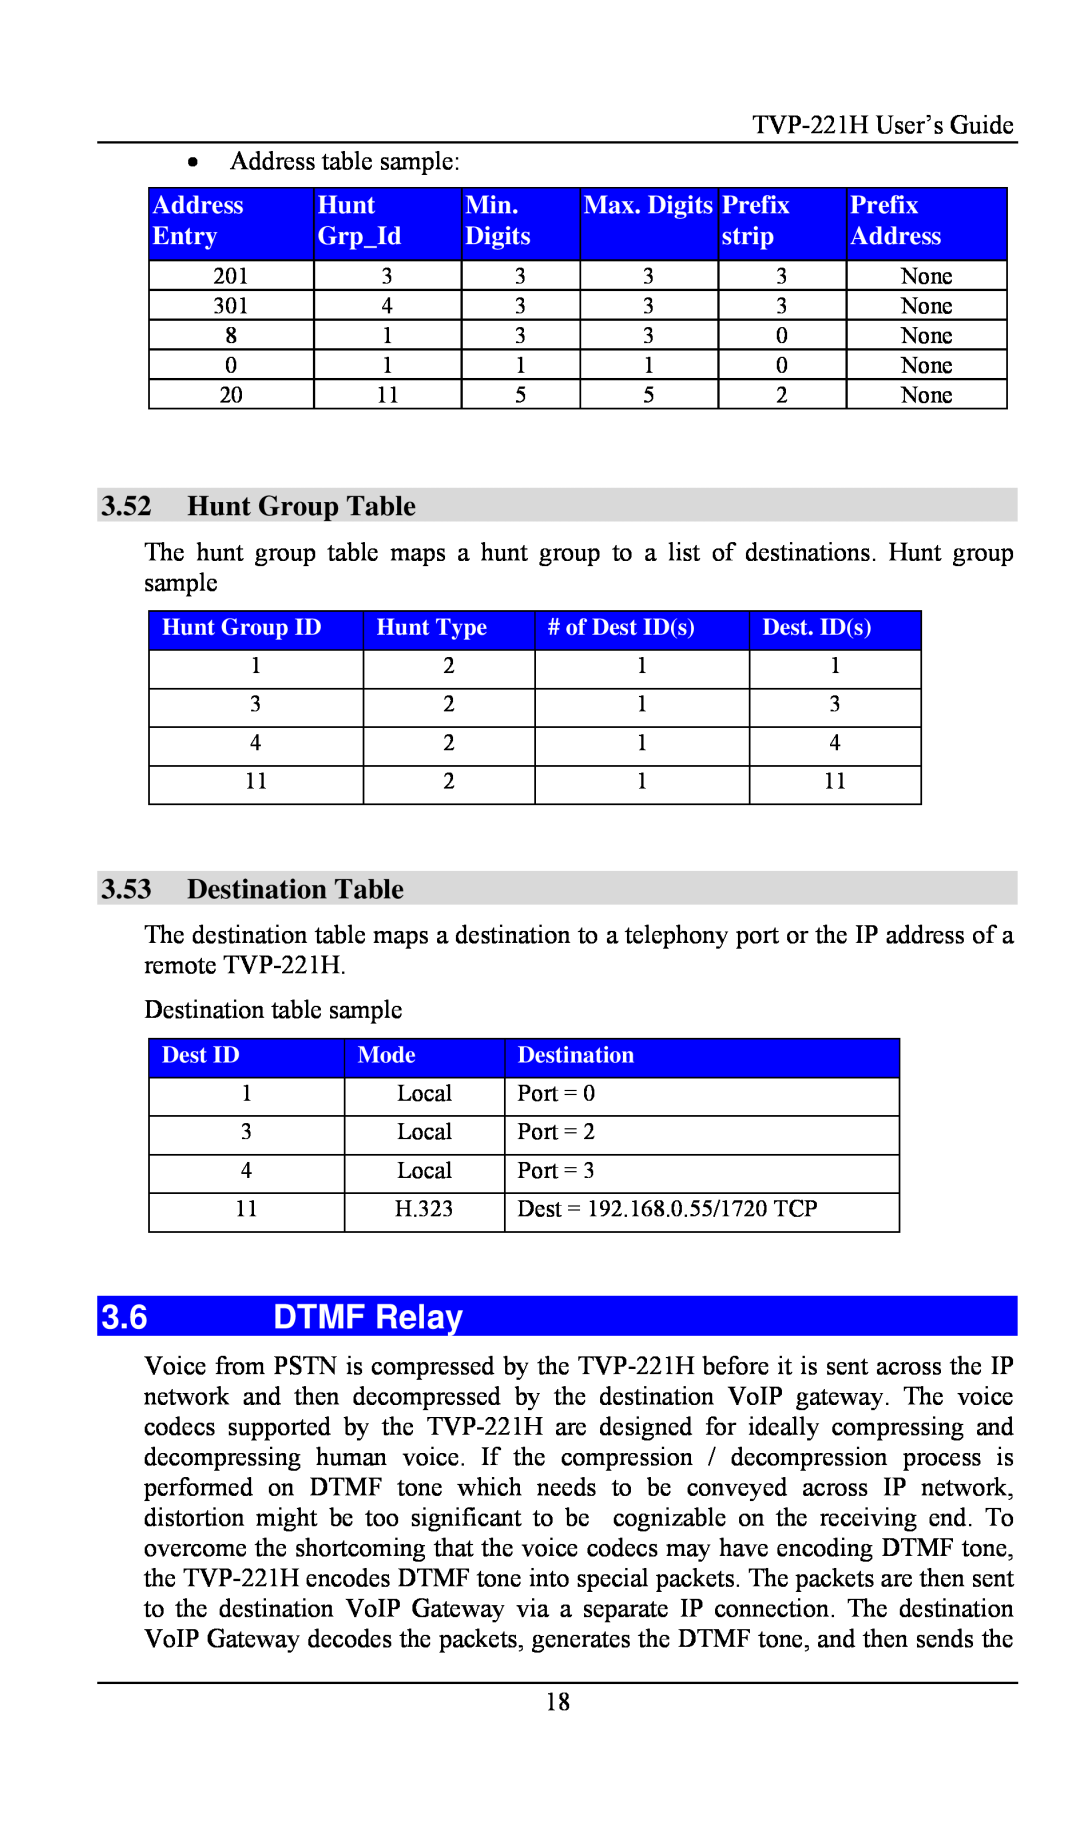 TRENDnet TVP- 221H manual DTMF Relay, Hunt Group Table, Destination Table, Address, Entry, GrpId, Digits, Prefix, strip 